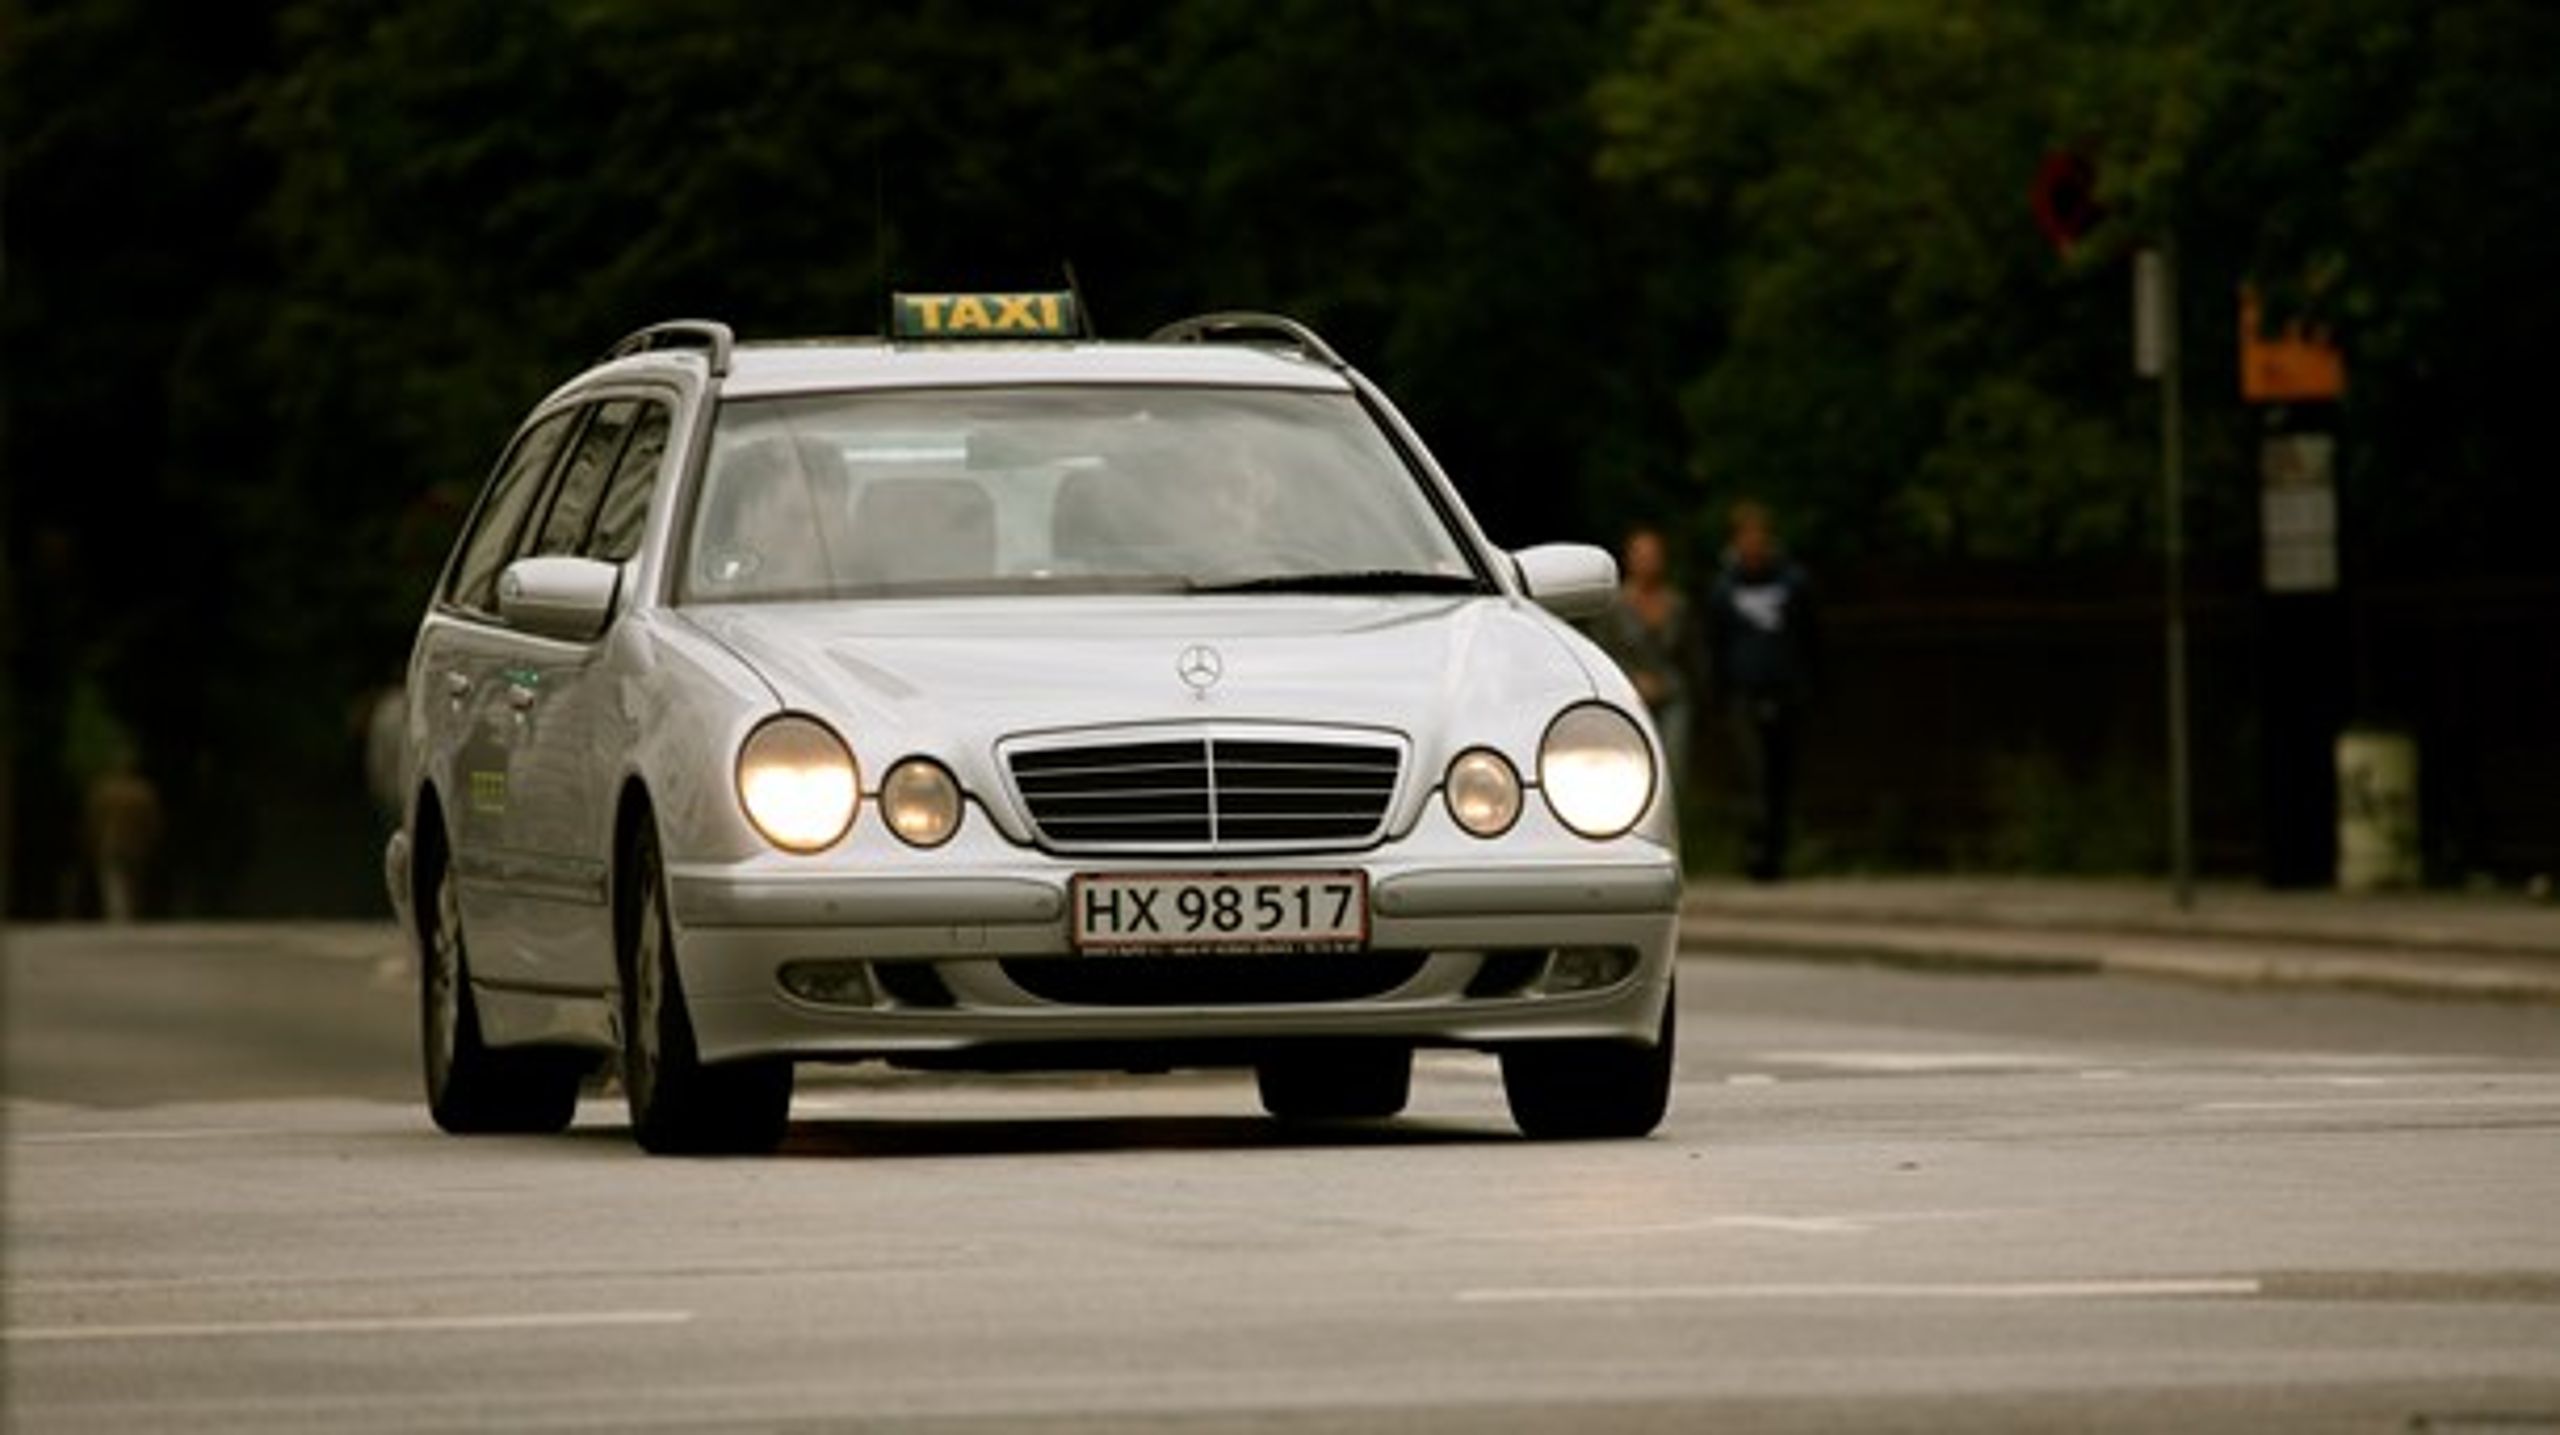 Kig på de svenske erfaringer og liberaliser taximarkedet, så det kan håndtere ny, moderne teknologi. Det skriver Thomas Ekman fra Cabonline.